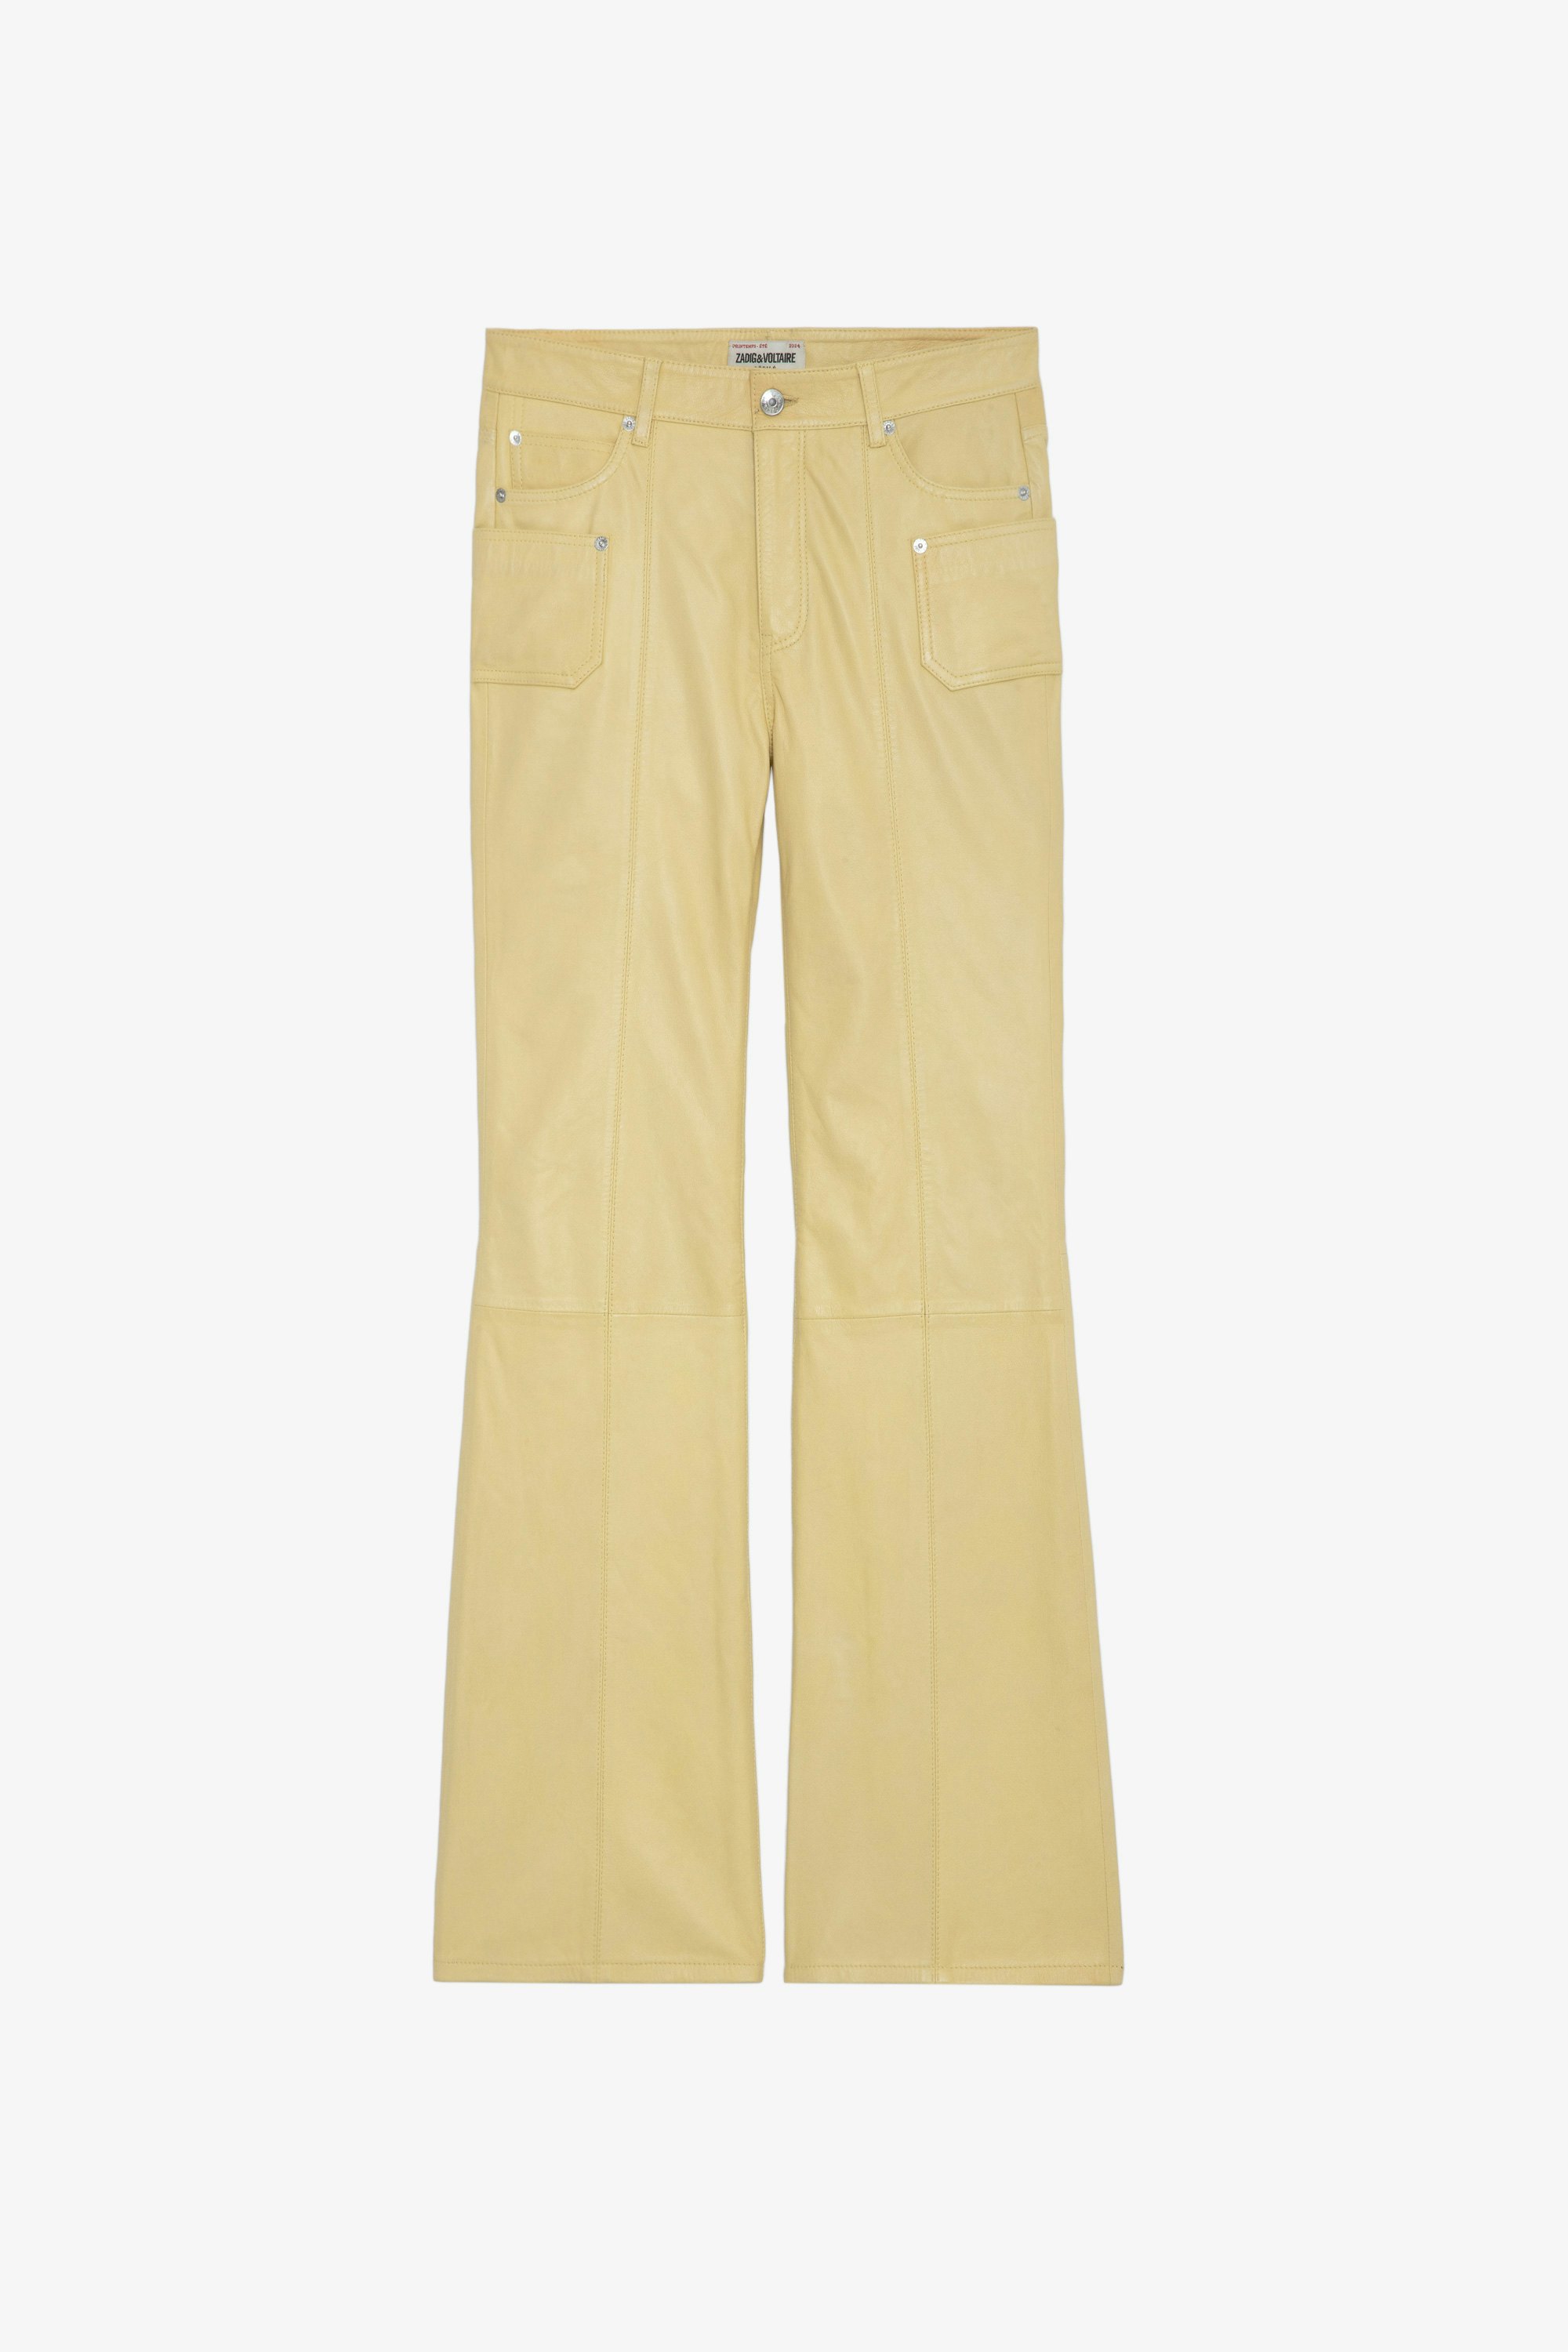 Pantaloni Elvir Pelle - Pantaloni in pelle liscia giallo chiaro con fondo svasato e tasche.